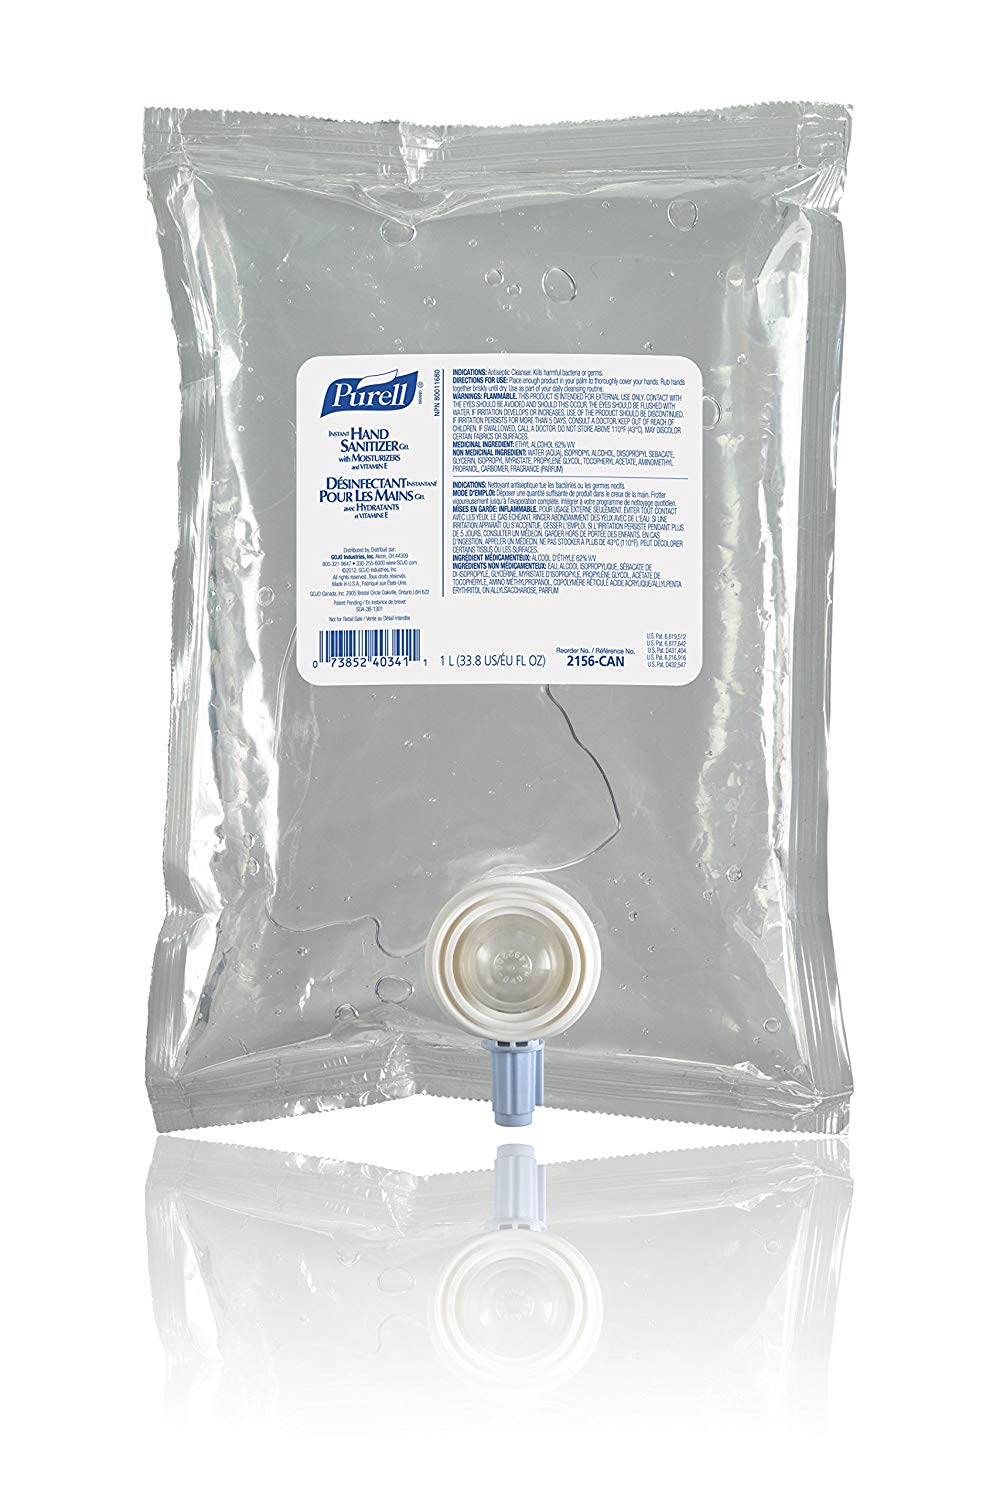 Purell NXT Hand Sanitizer 1 Liter Refill